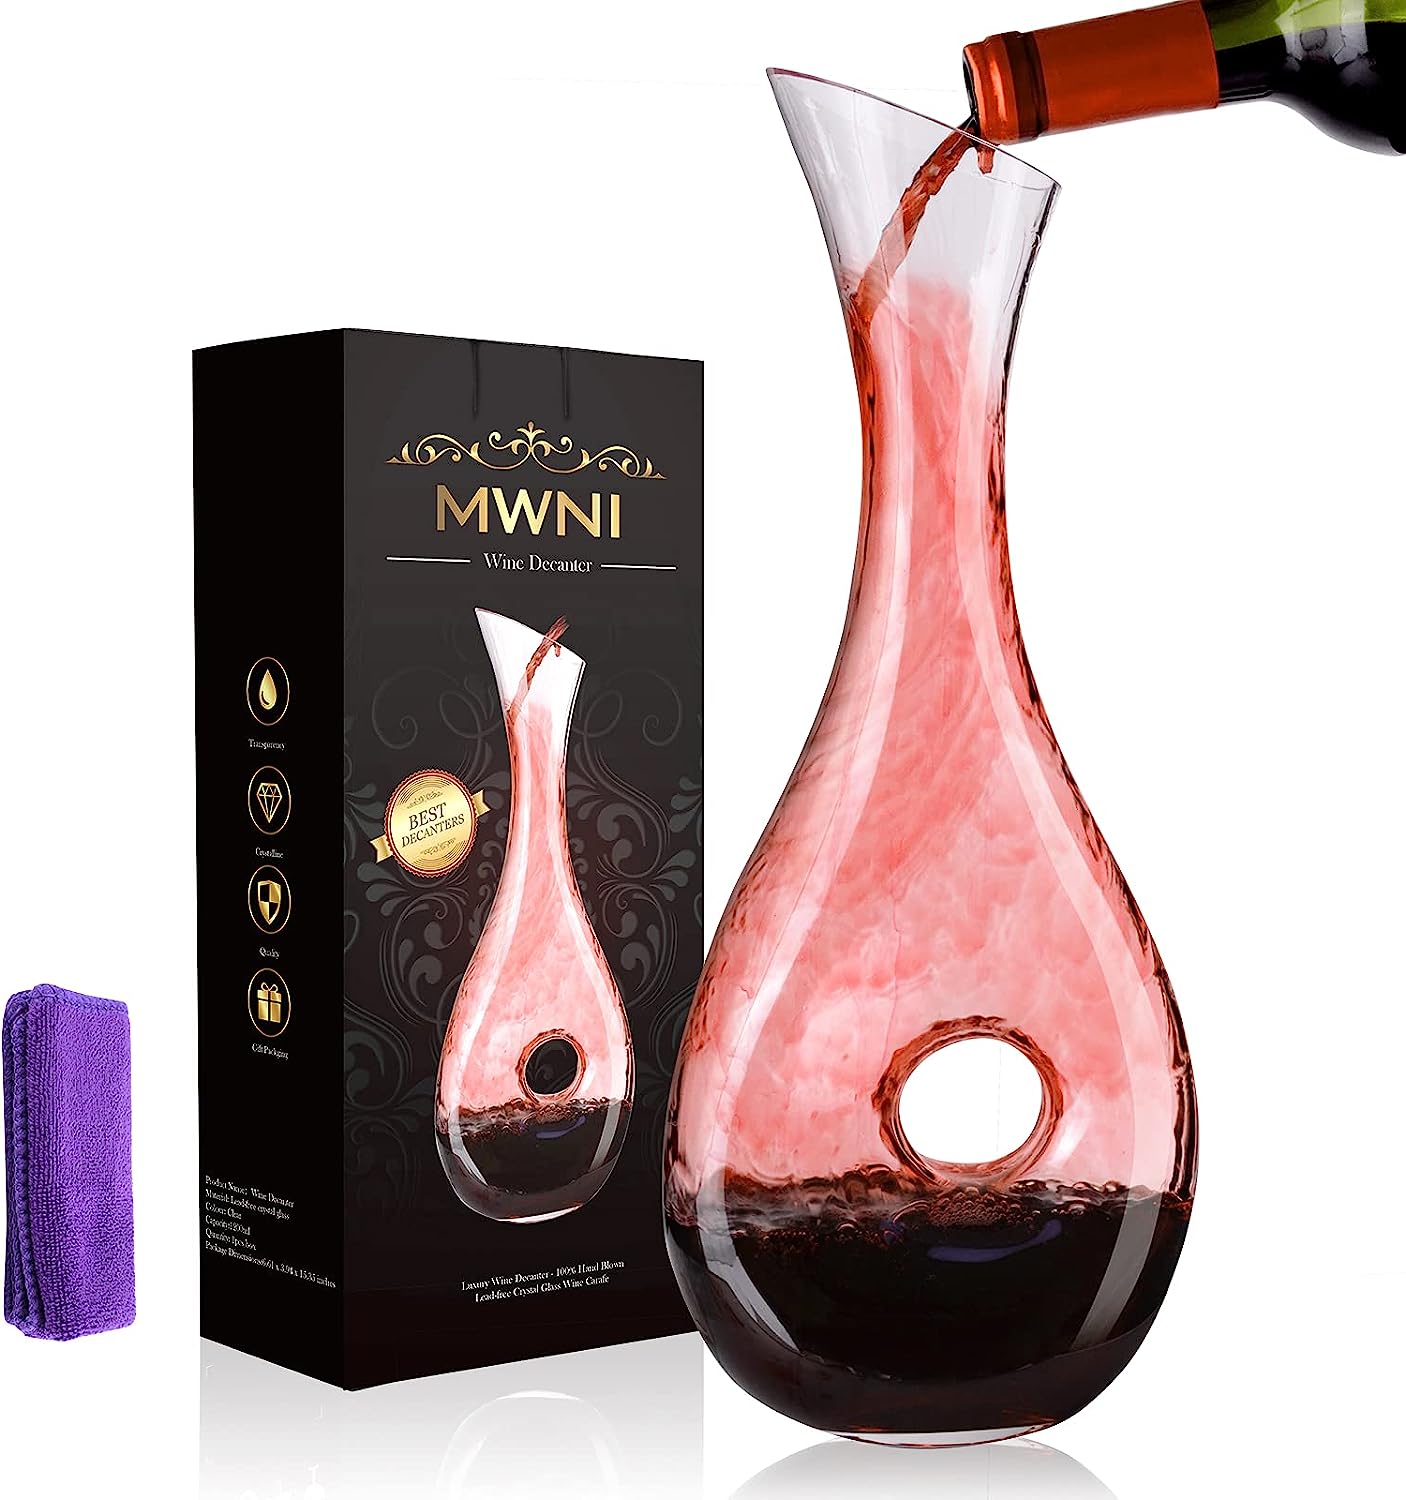 BTaT- Wine decanter, 40 oz, Wine Carafe, Wine Decanters and Carafes, Wine  Carafe Decanter, Decanter Wine, Wine Carafe Decanter, Wine Gifts, Small  Wine